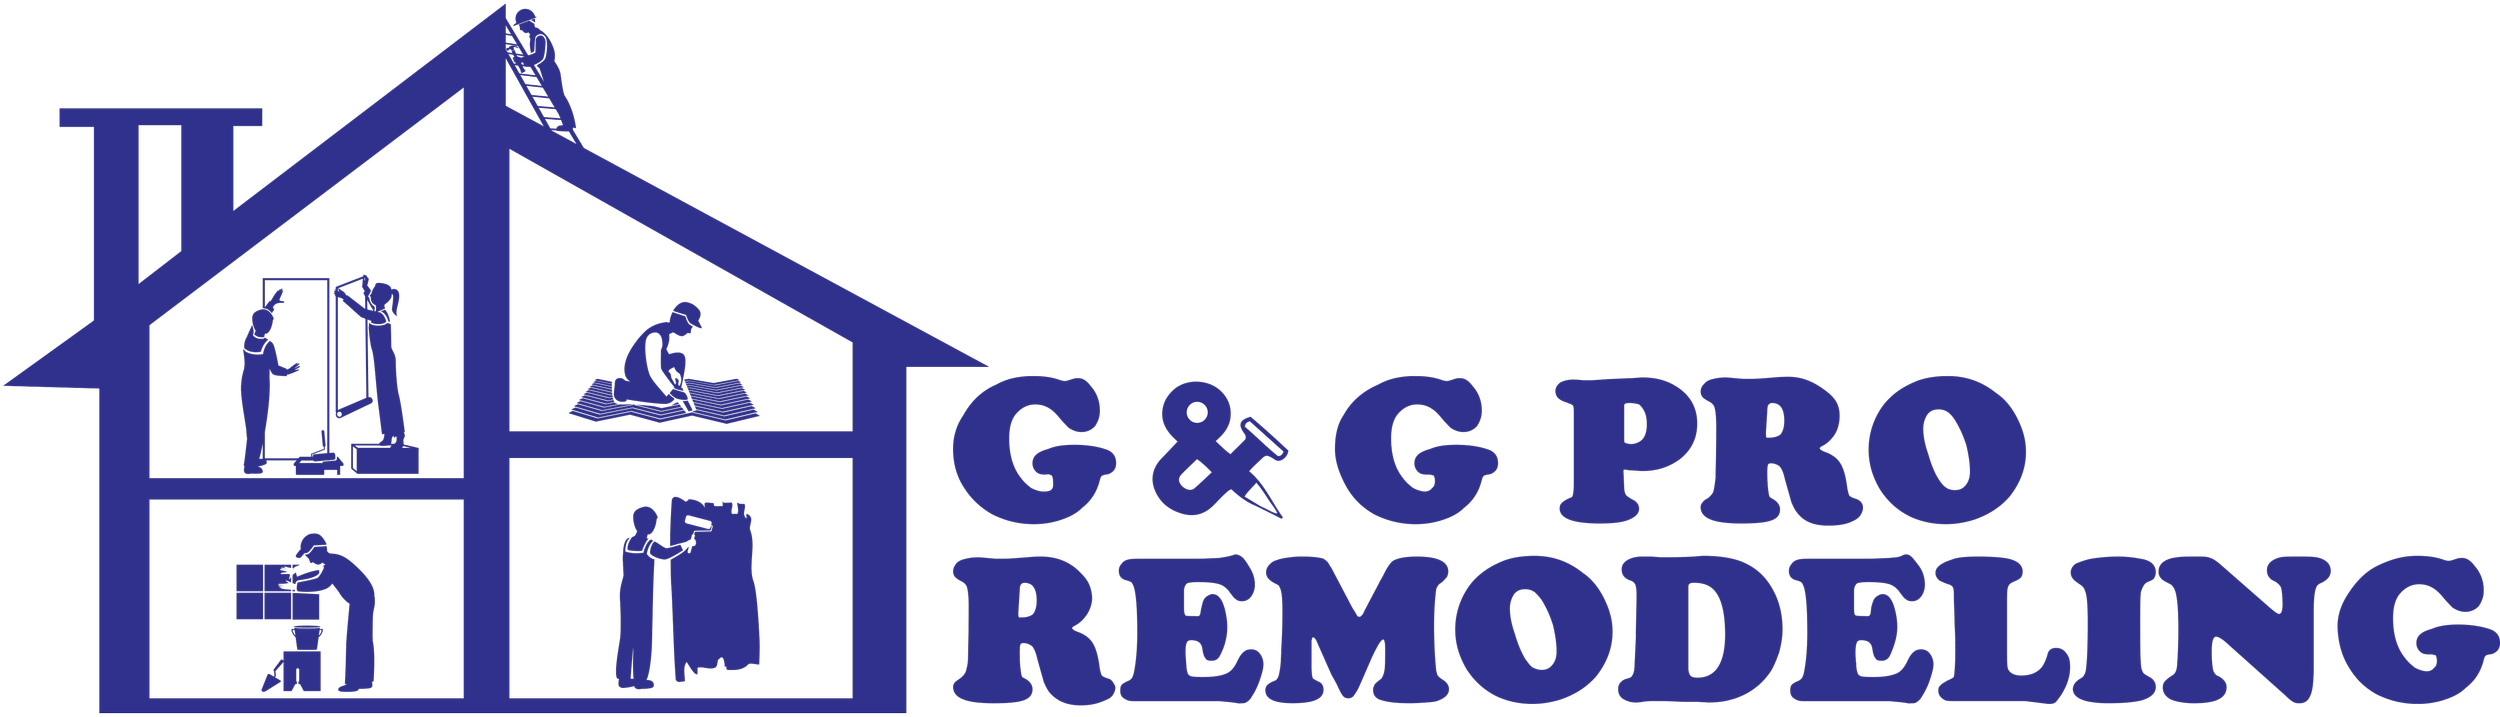 G_G Pro Logo.png